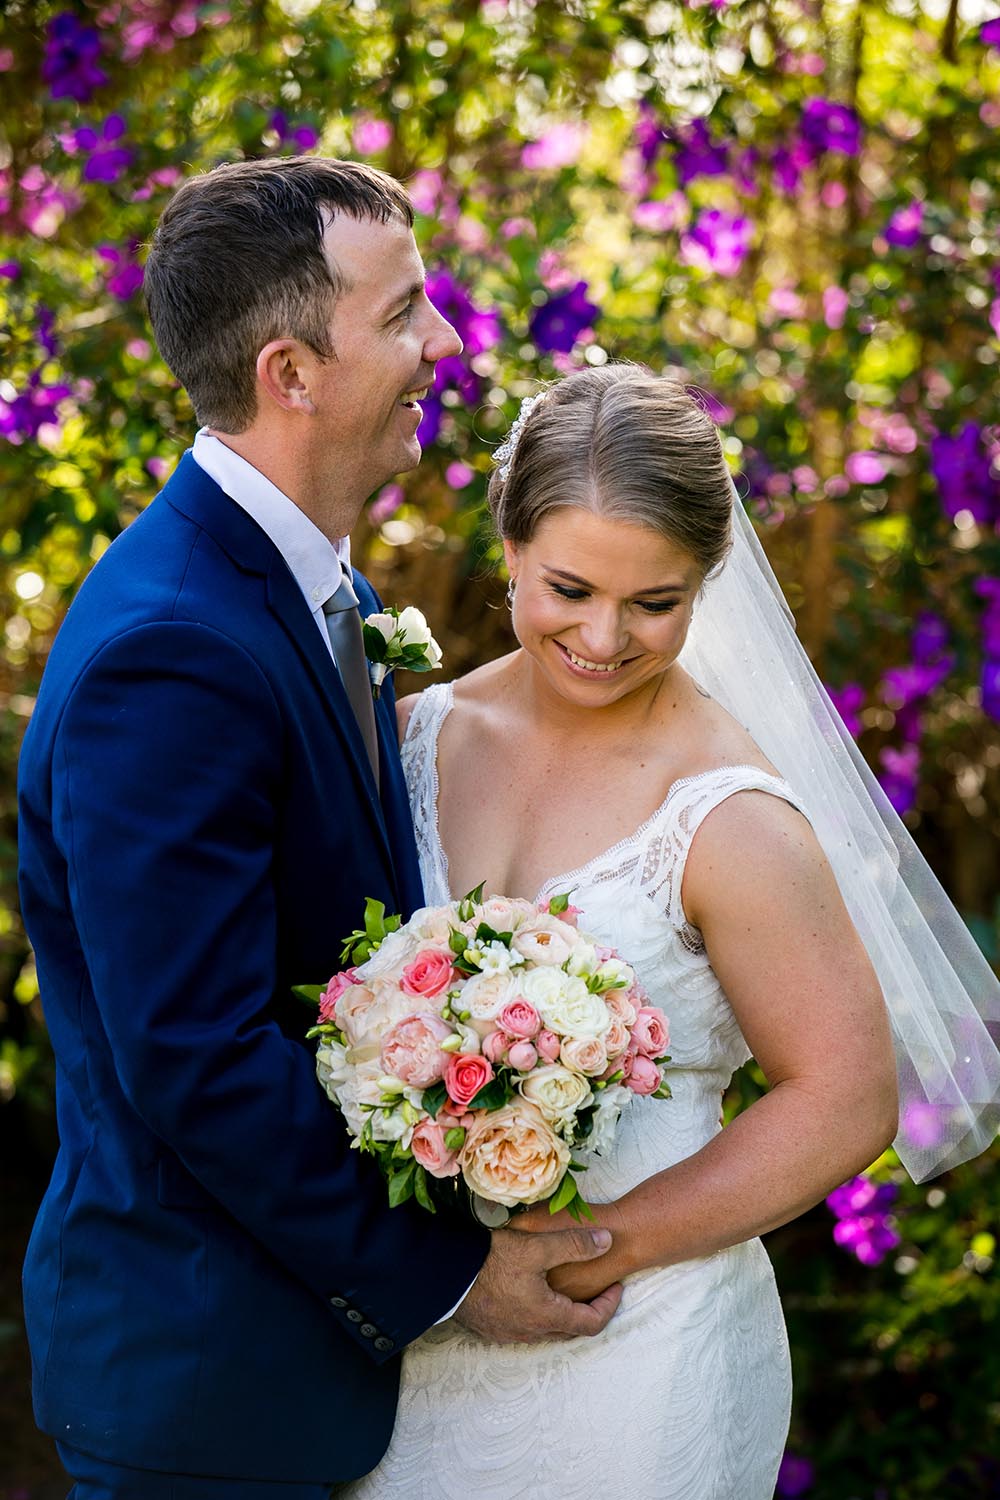 Wedding Photography - Bride and groom